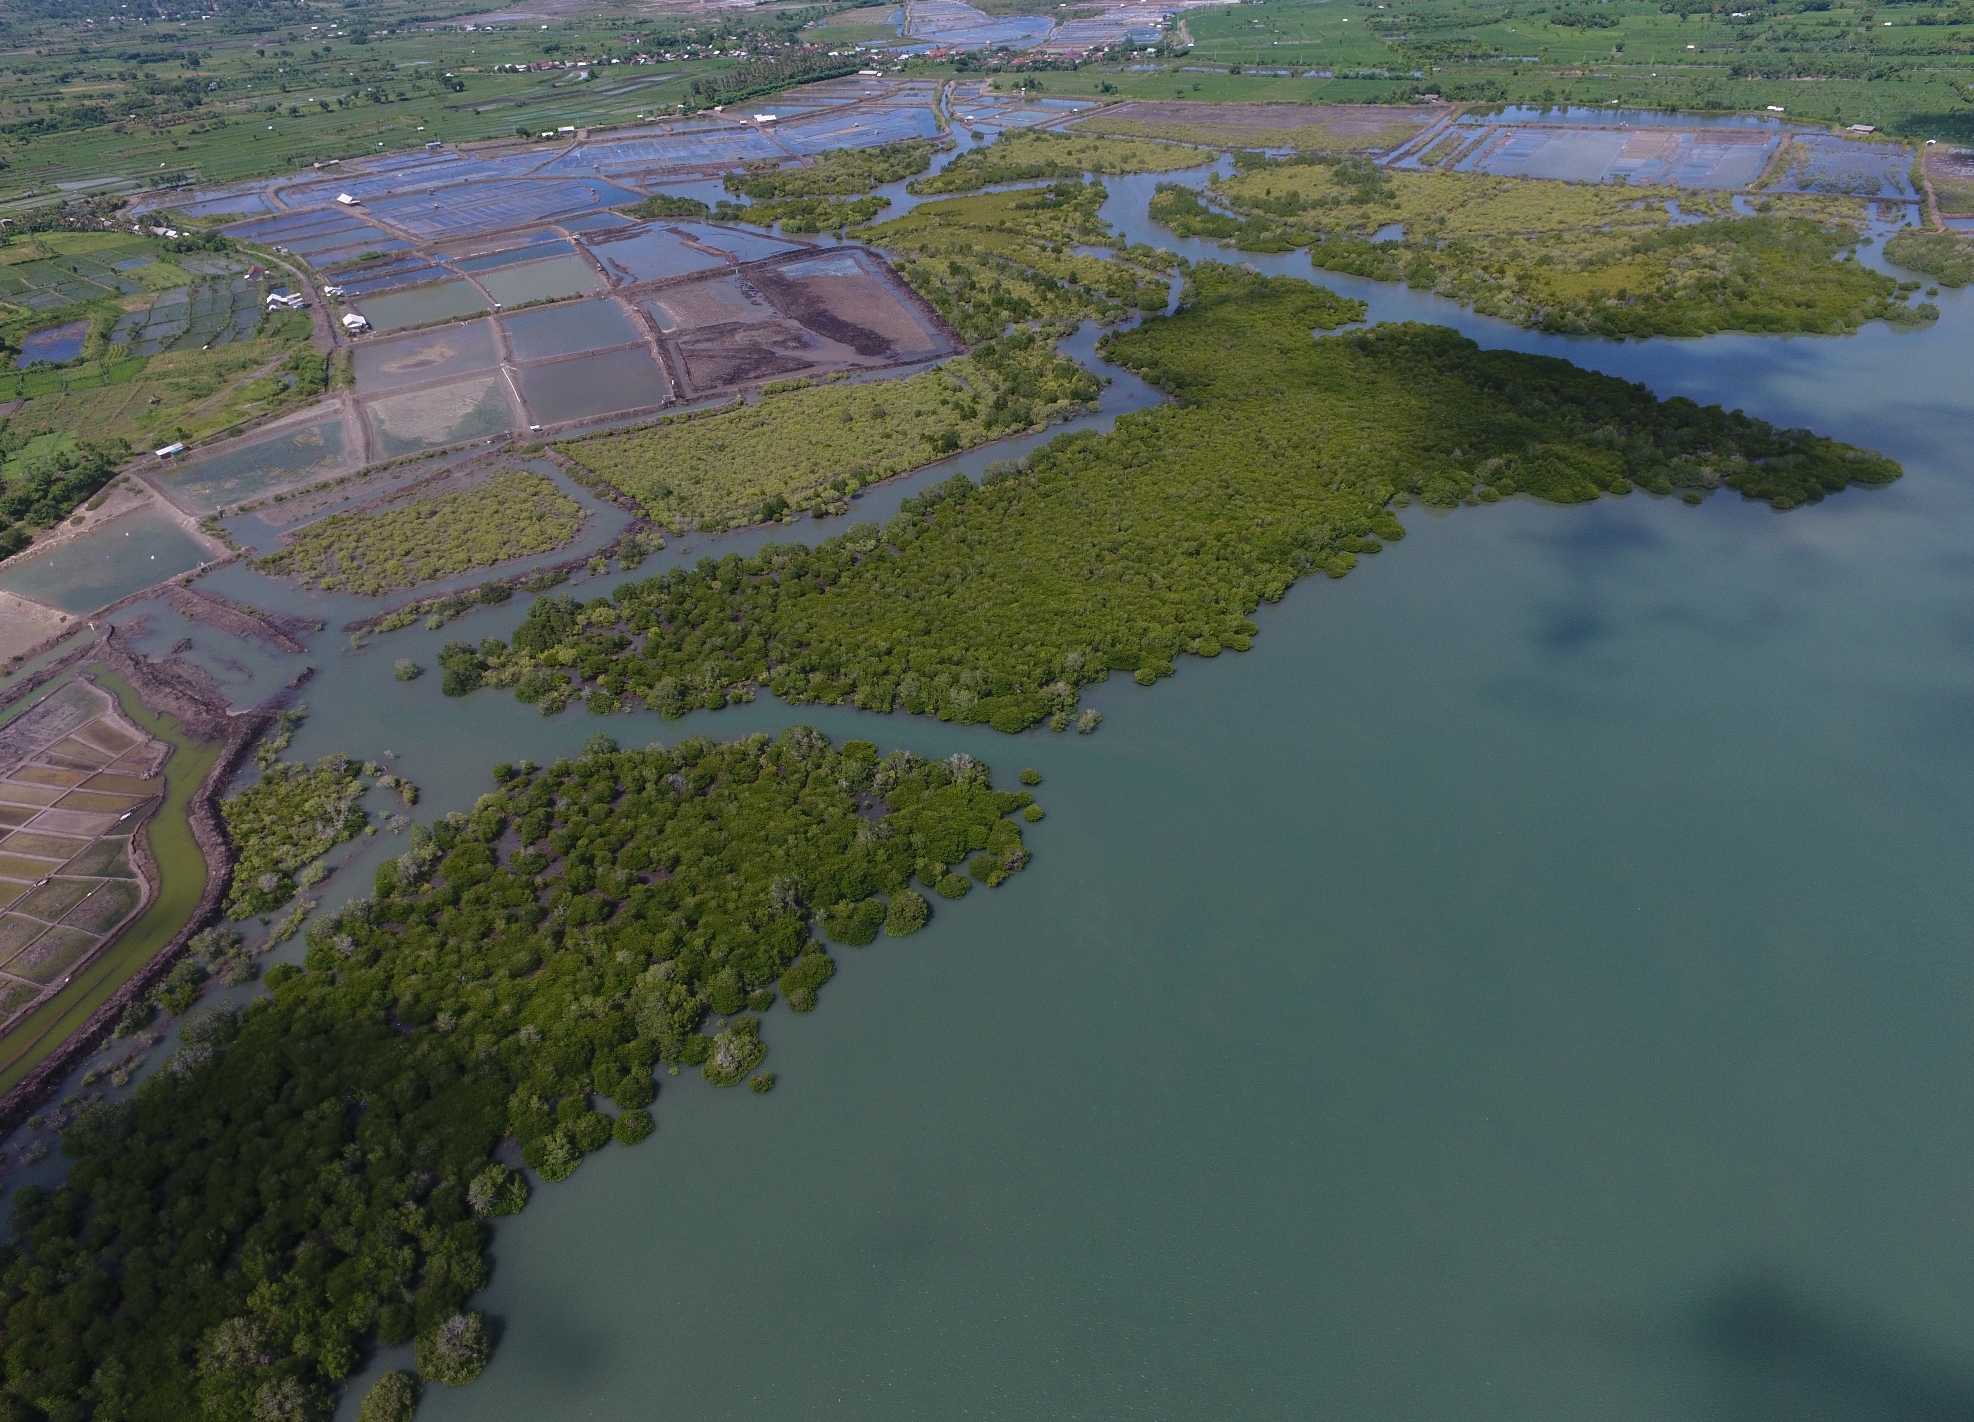 Tampak hutan mangrove lumayan rimbun. Ancaman masih mengintai bagi mangrove di Teluk Jor, termasuk di Desa Paremas, ini oleh tambak garam dan tambak udang. Padahal, hutan mangrove itu melindungi kampung mereka dari abrasi dan rob | Foto: Fathul Rakhman/ Mongabay Indonesia